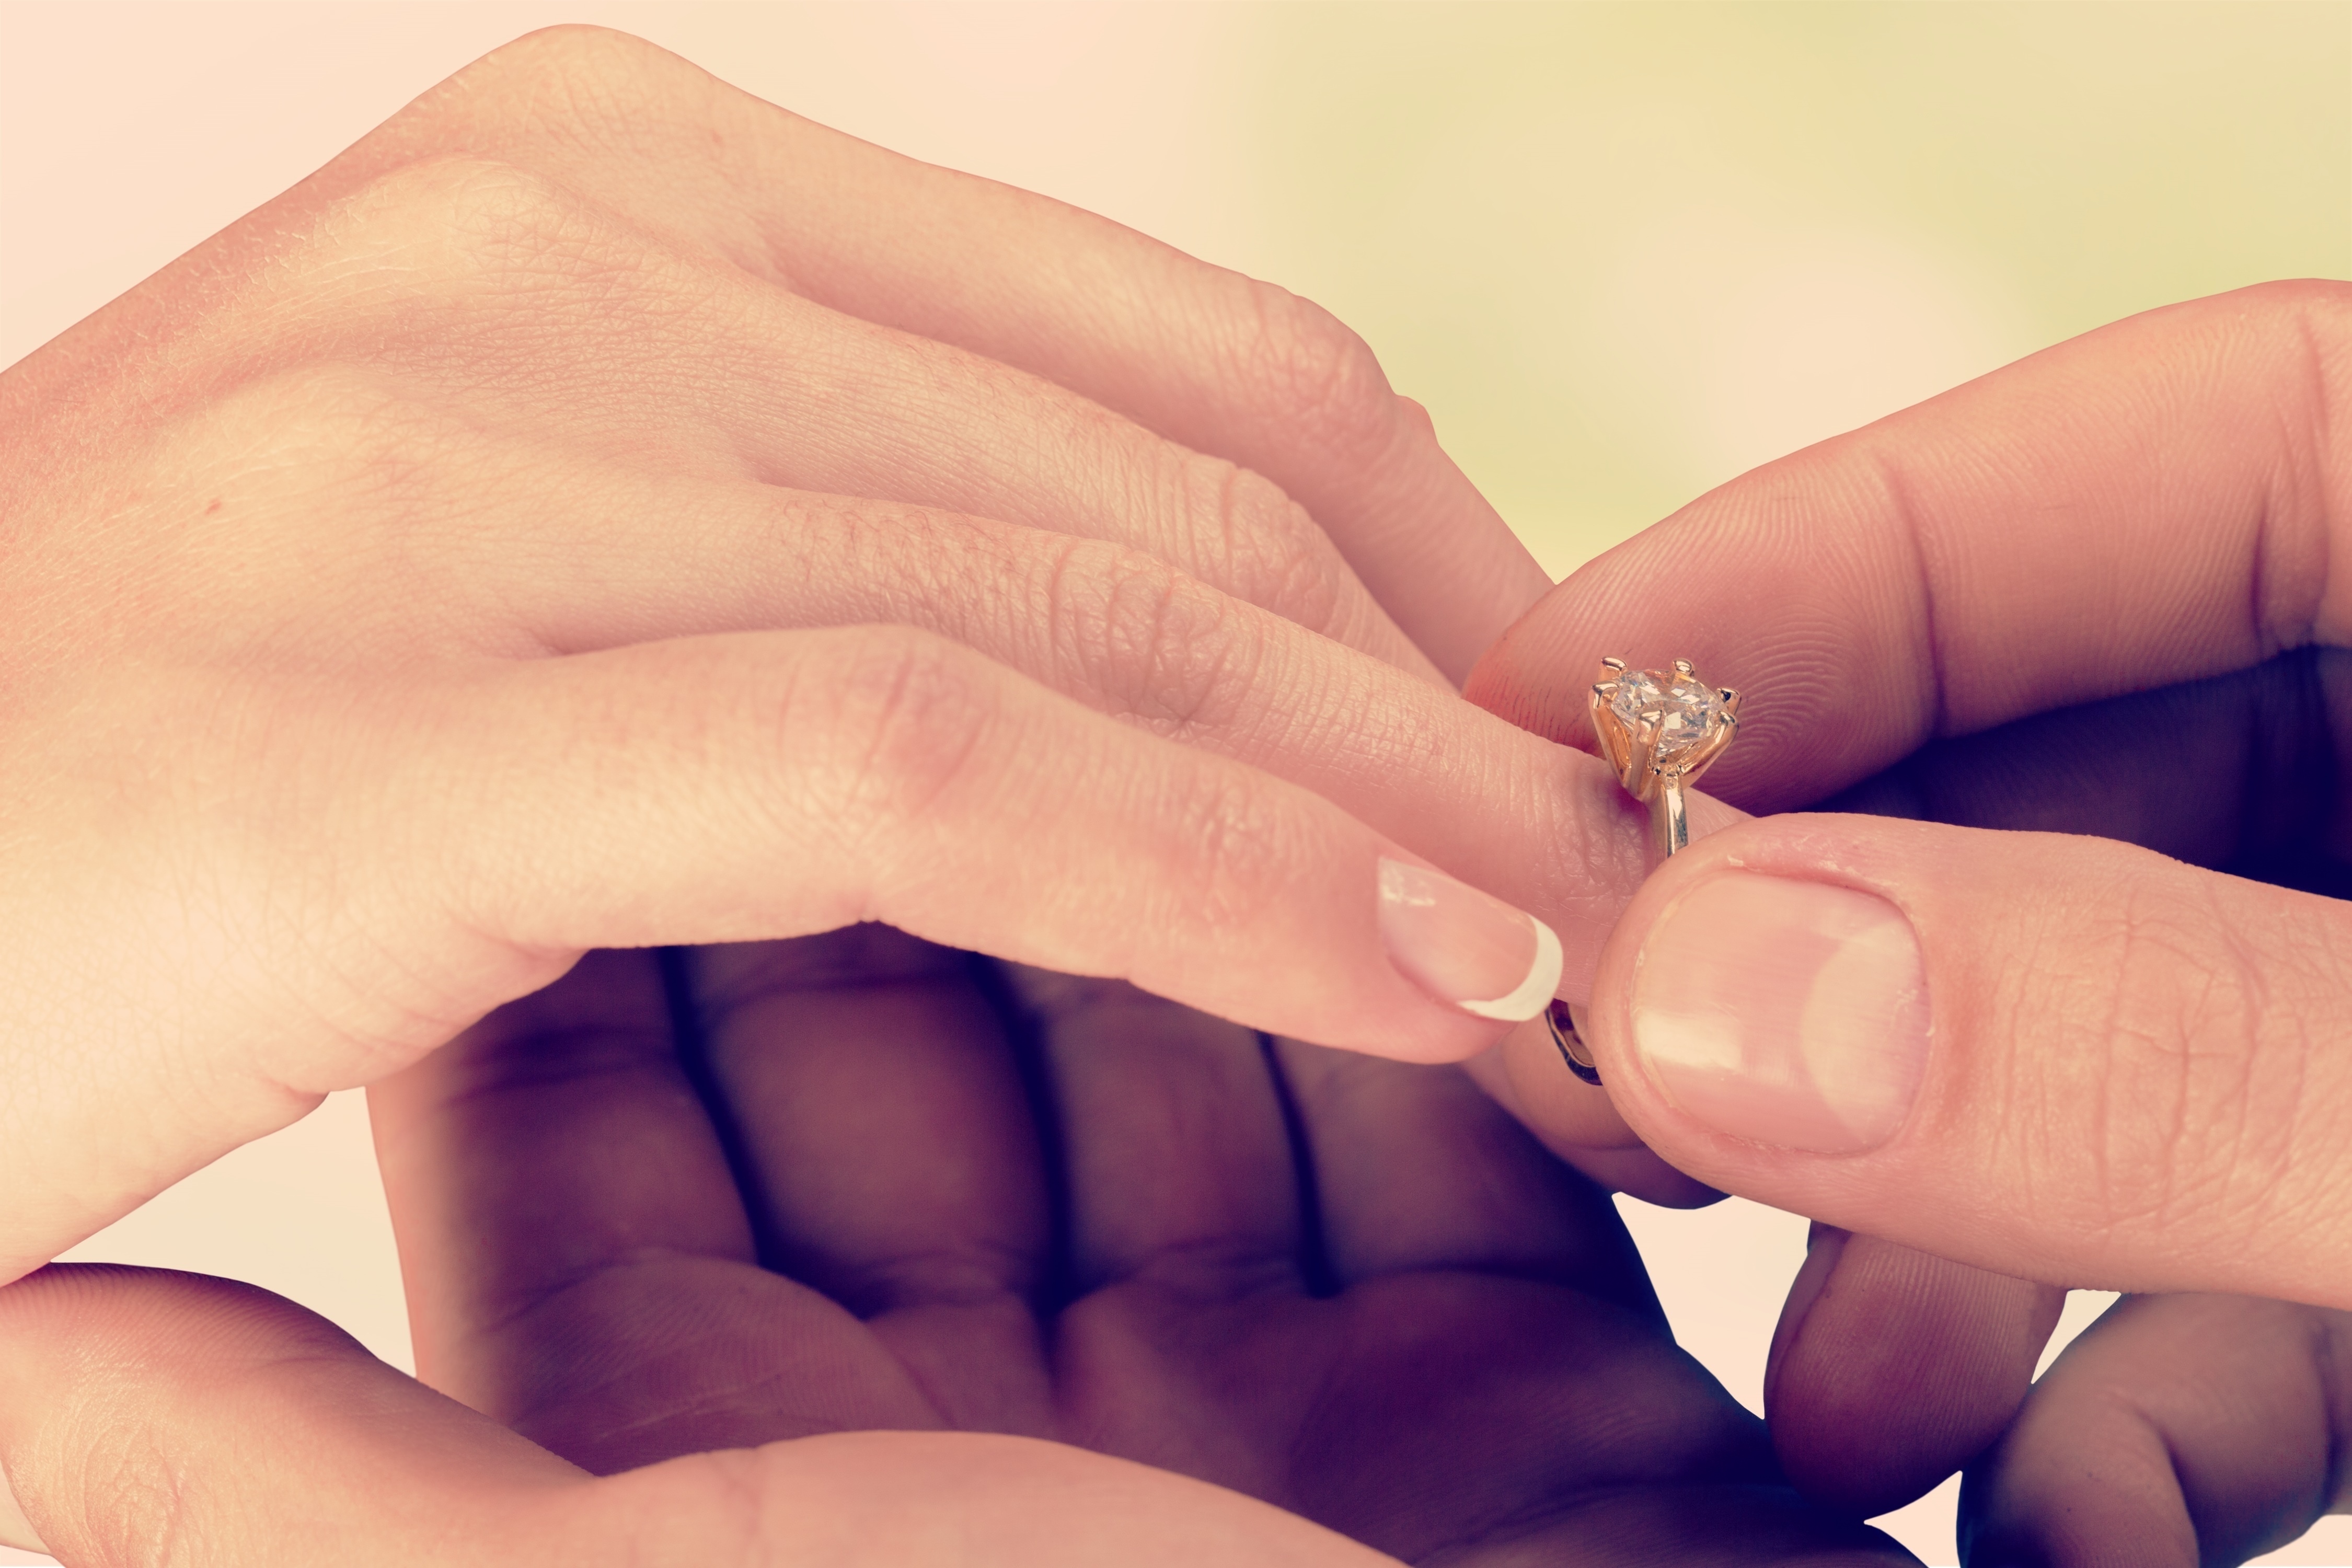 Любить навеки откуда у тебя это кольцо. Парень надевает кольцо девушке. Надевает кольцо на палец. Обручальное кольцо на пальце. Парень надеваеткольуо девушке.